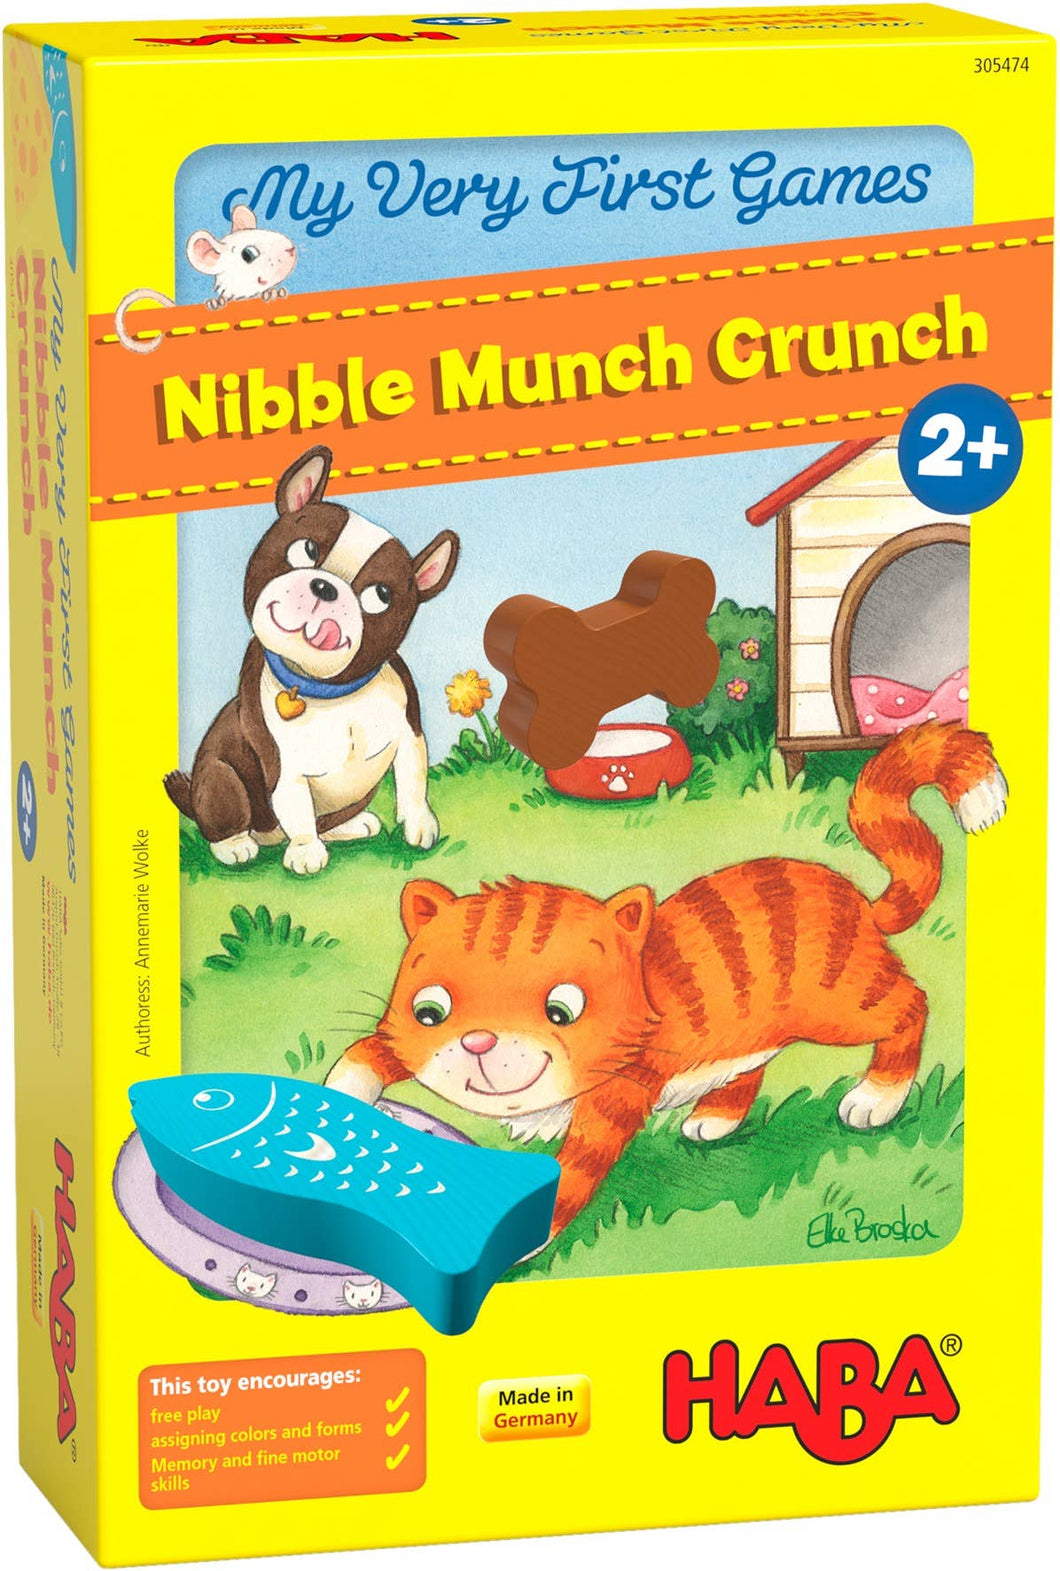 MVFG Nibble Munch Crunch